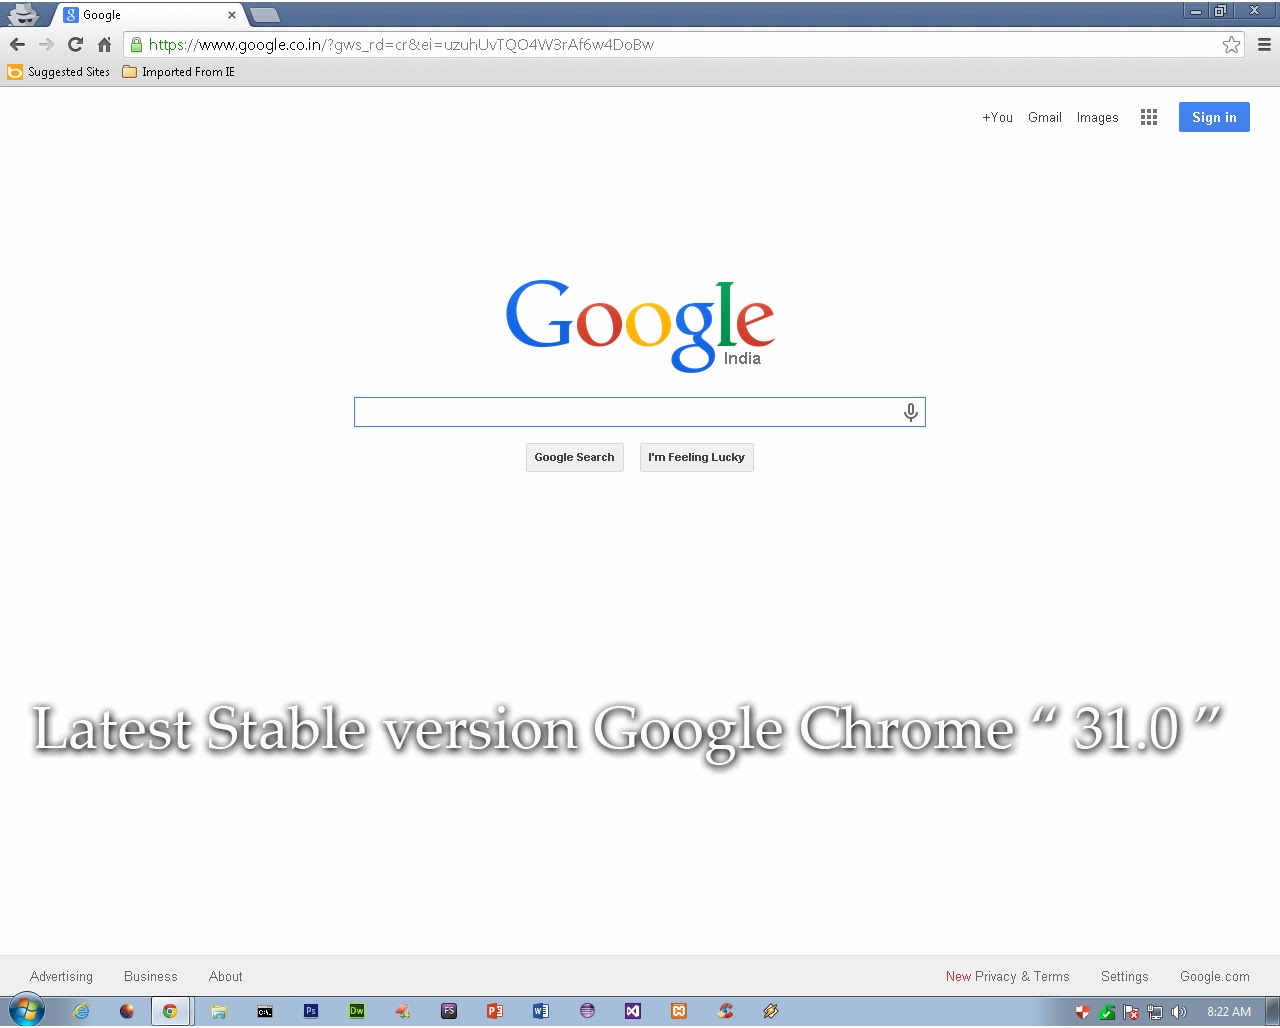 Download latest Google Chrome version " 31.0.1650.63 